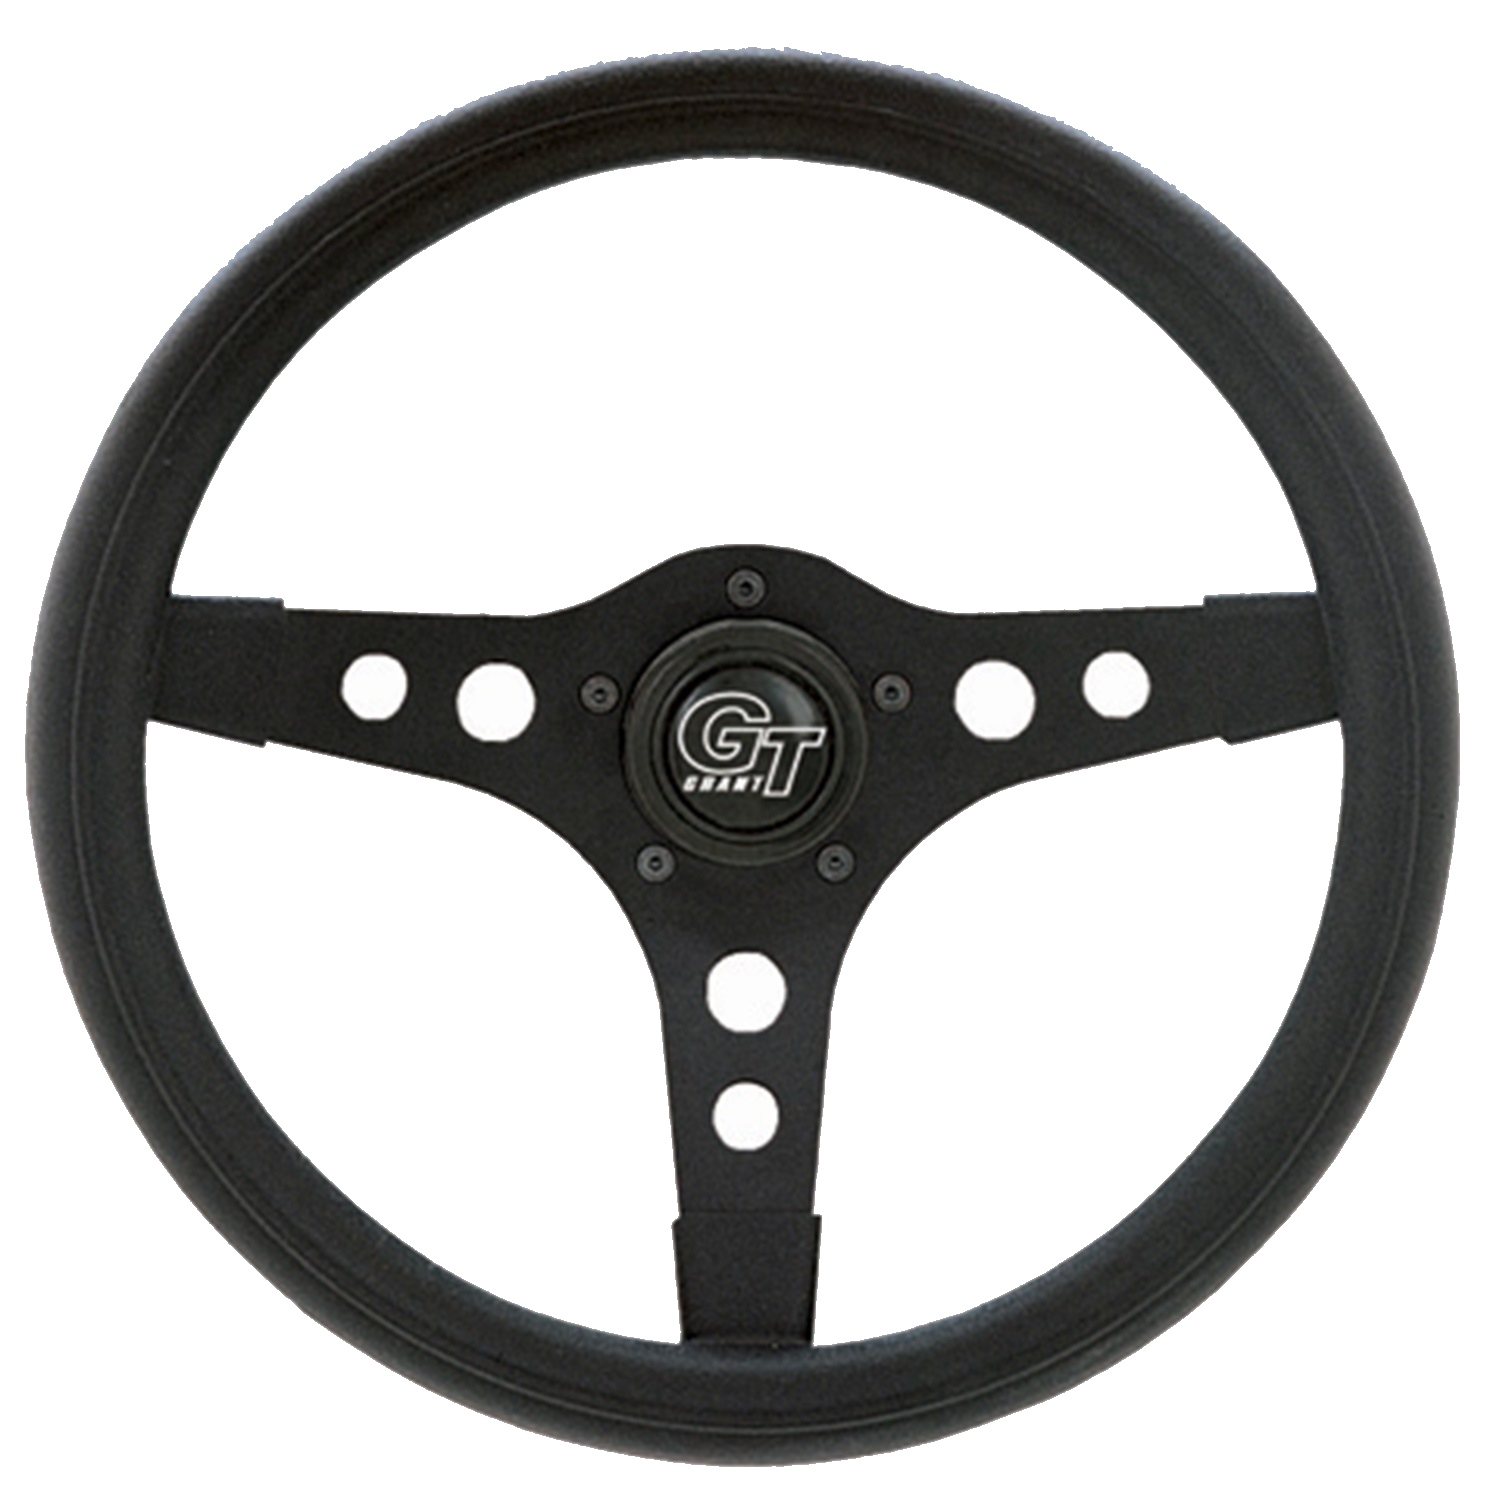 Grant 702 Steering Wheel Signature Performance GT Sport 13' Diameter